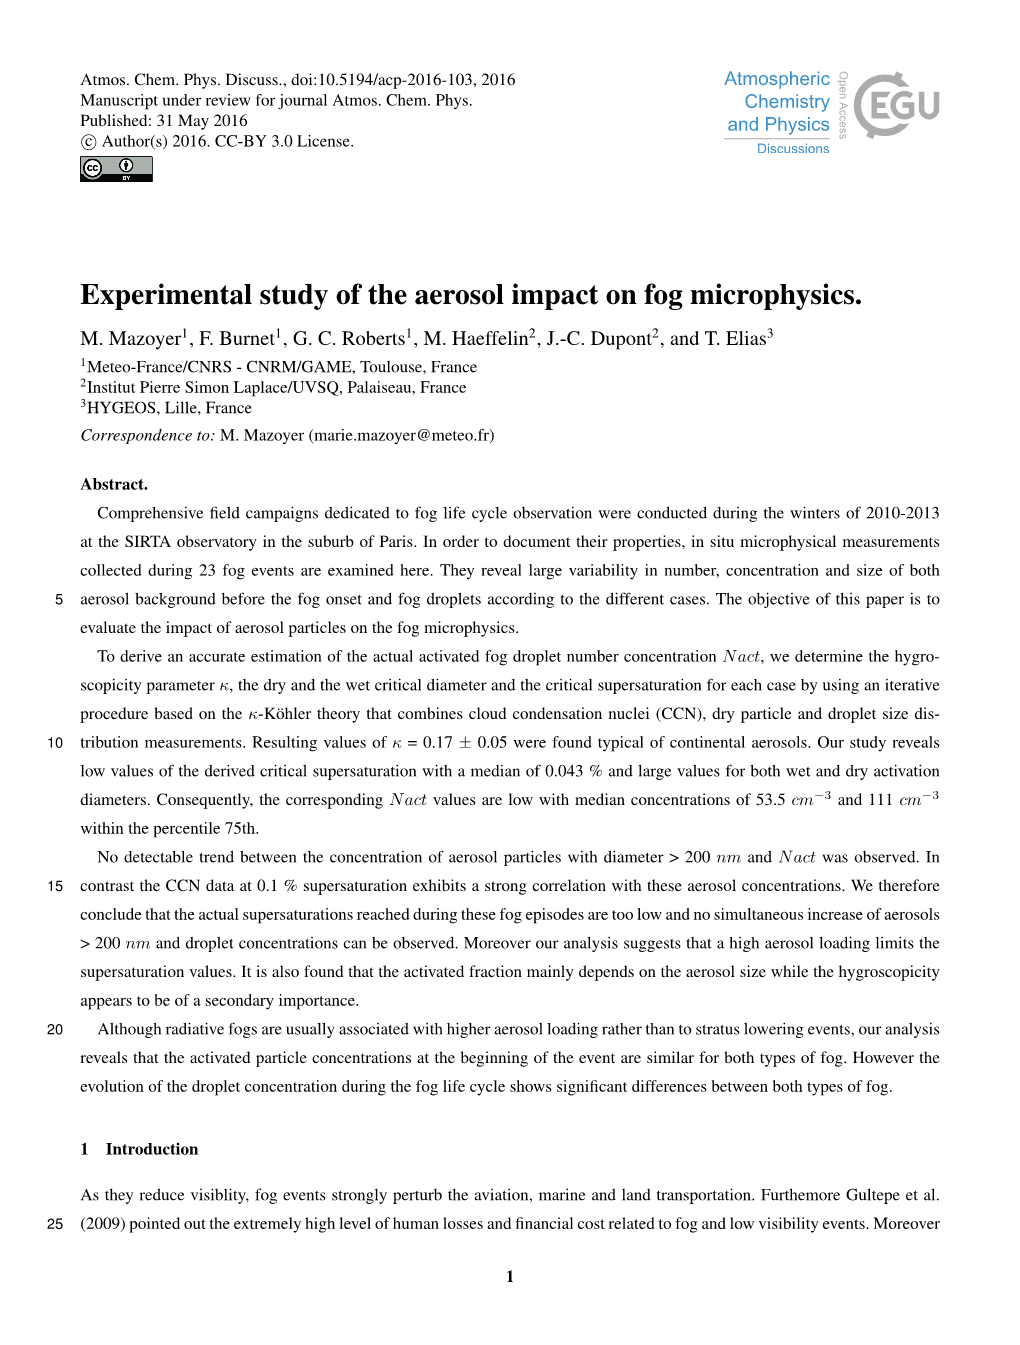 Experimental Study of the Aerosol Impact on Fog Microphysics. M